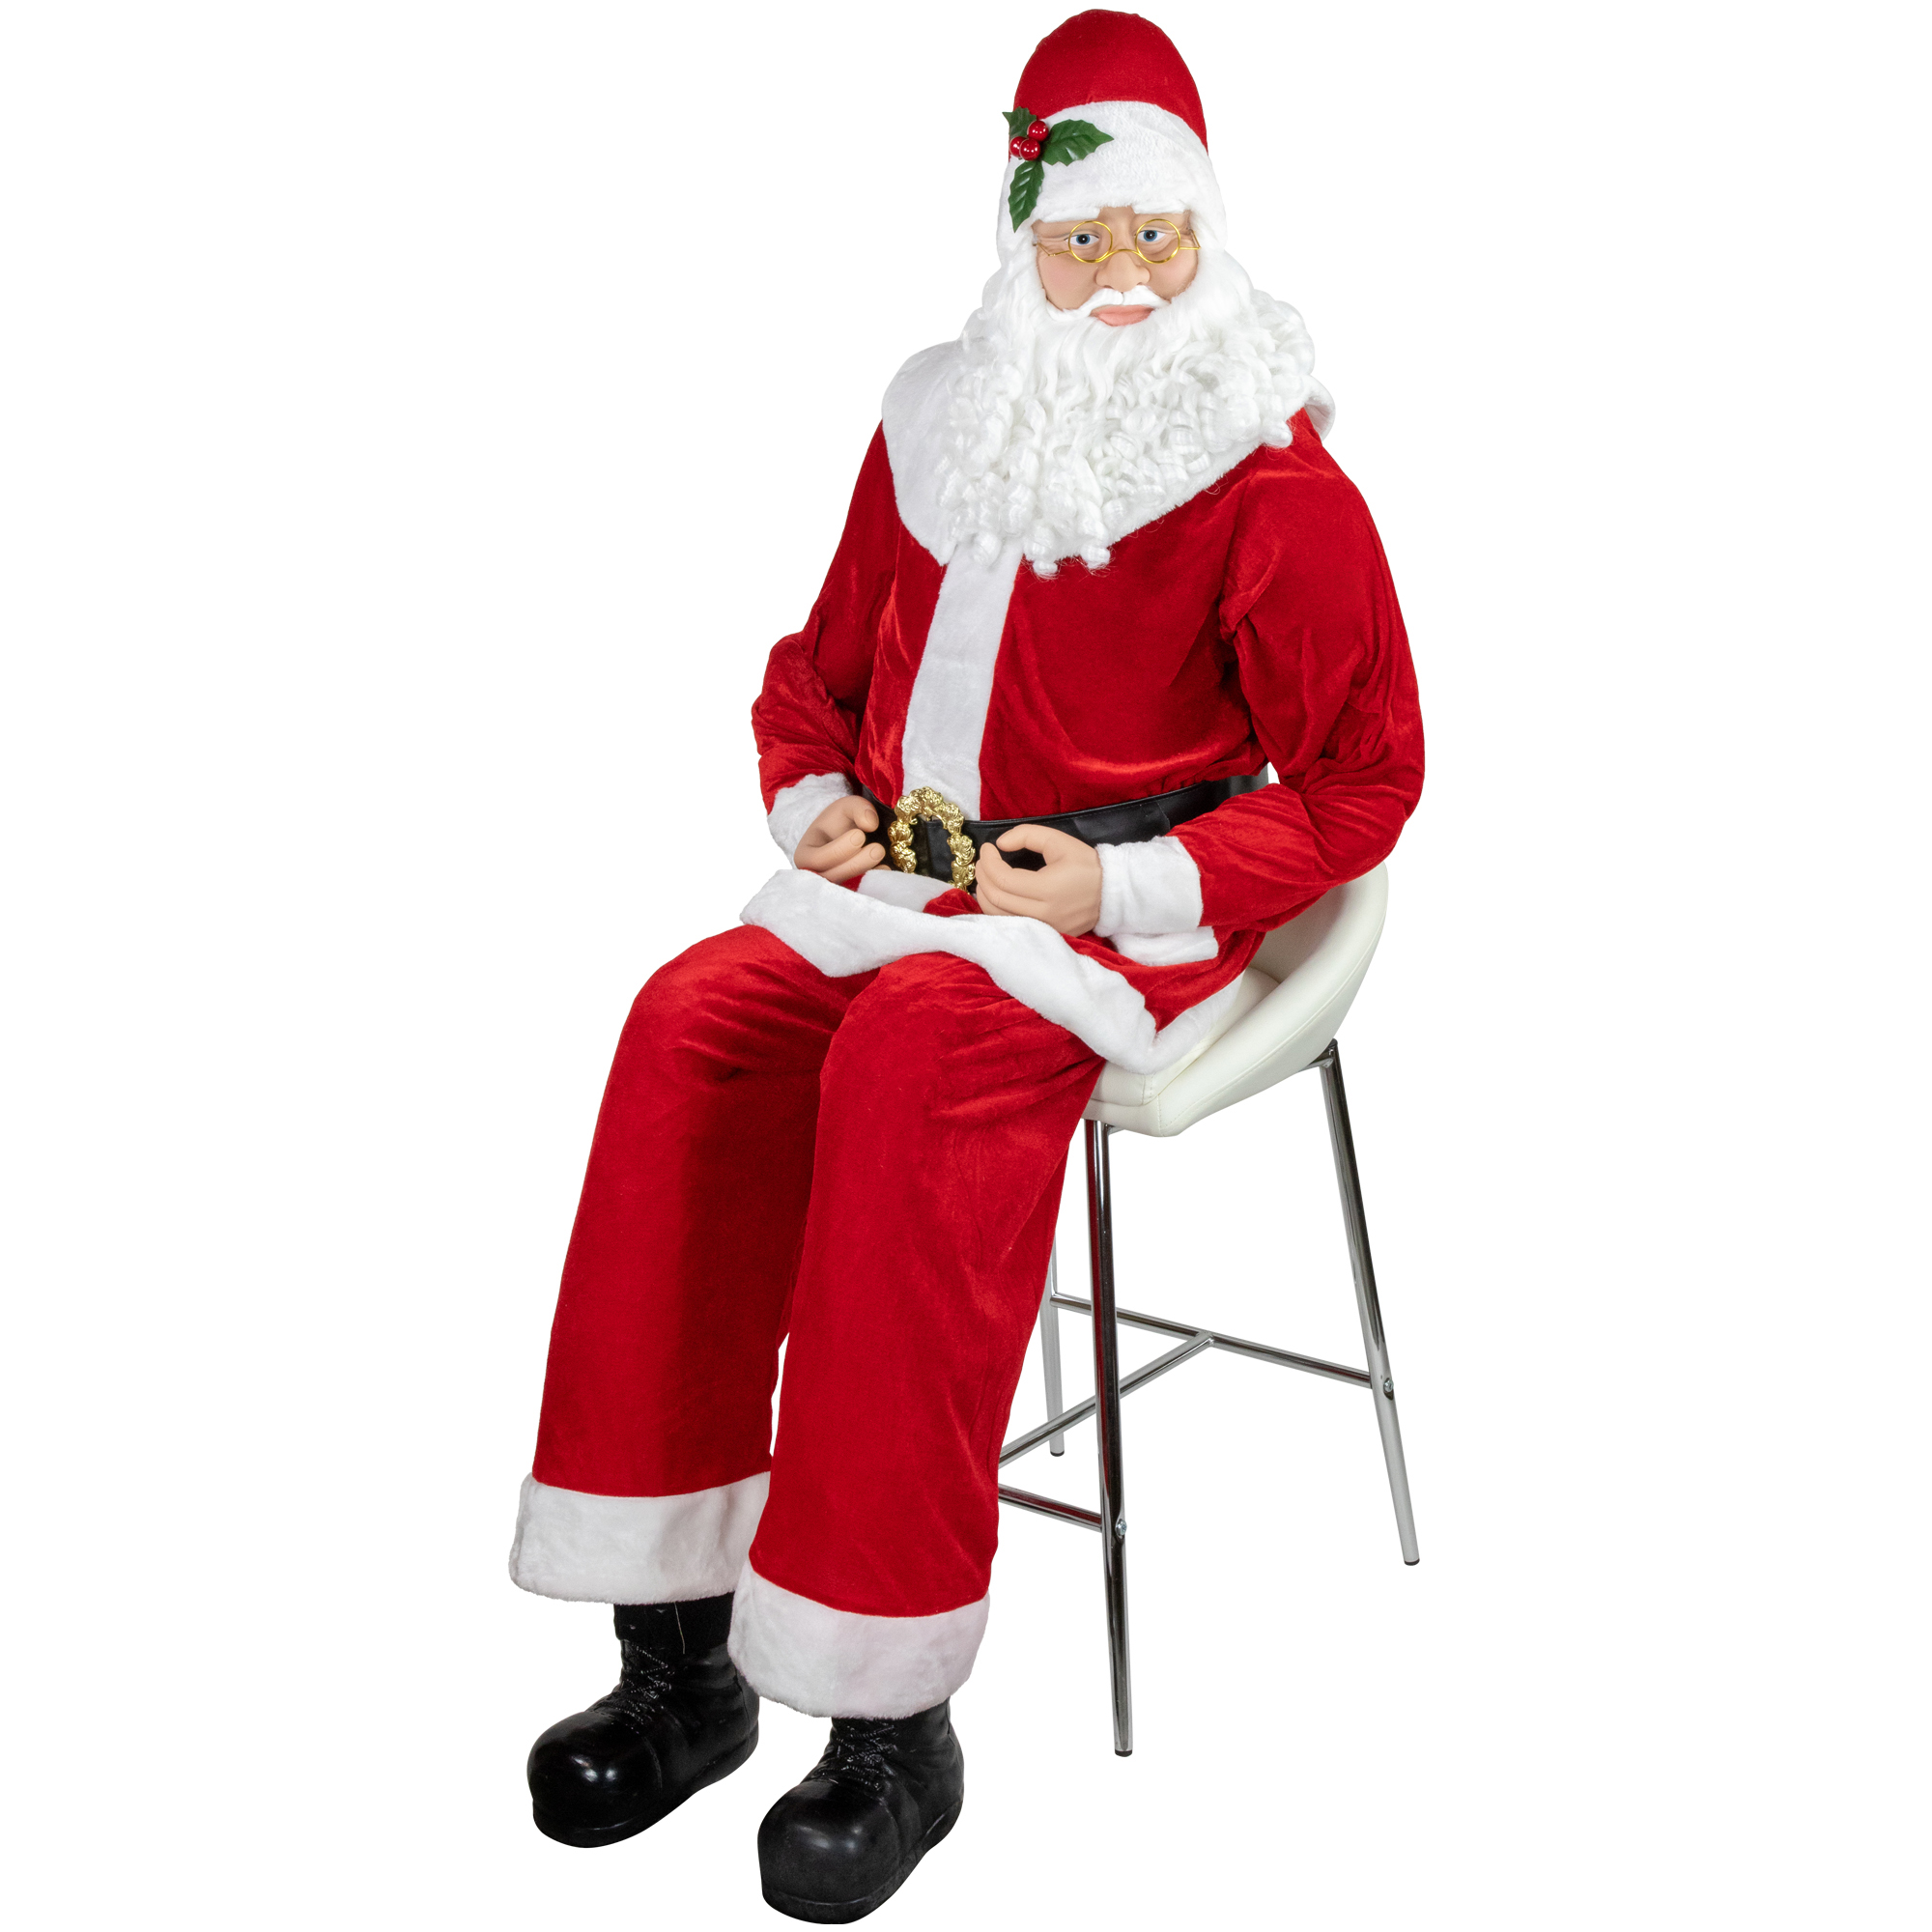 Northlight 72" Life-Size Plush Santa Claus Standing or Sitting Christmas Figure